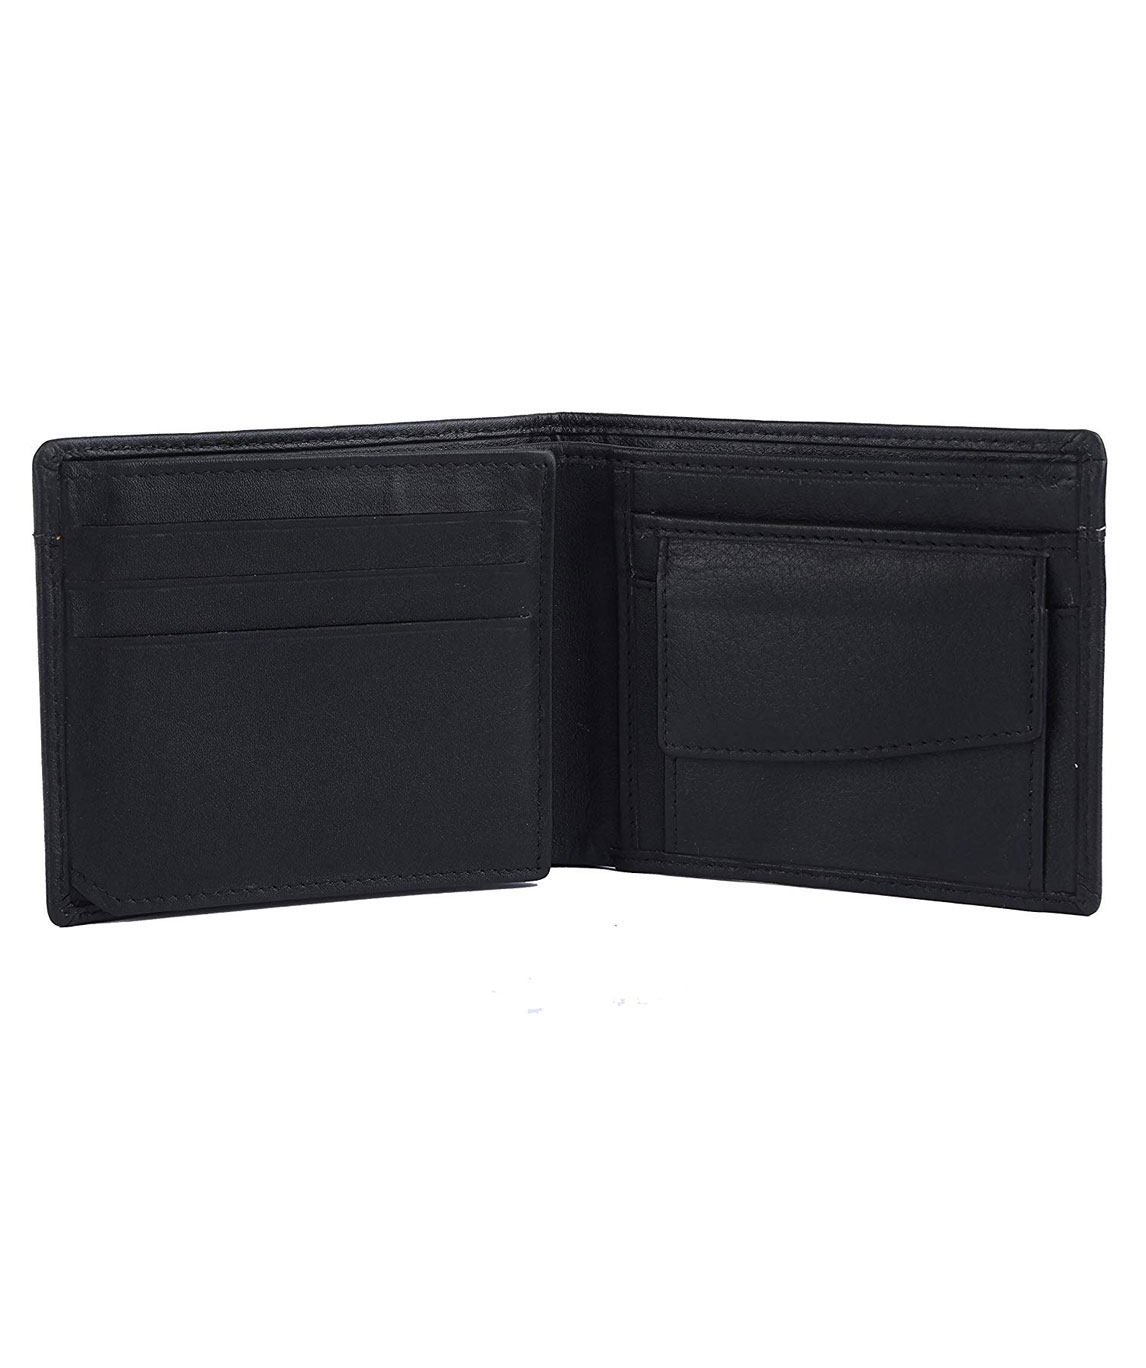 wallets for women card holder wallet parsh boy atm card holderpassport  cover hand purse for women